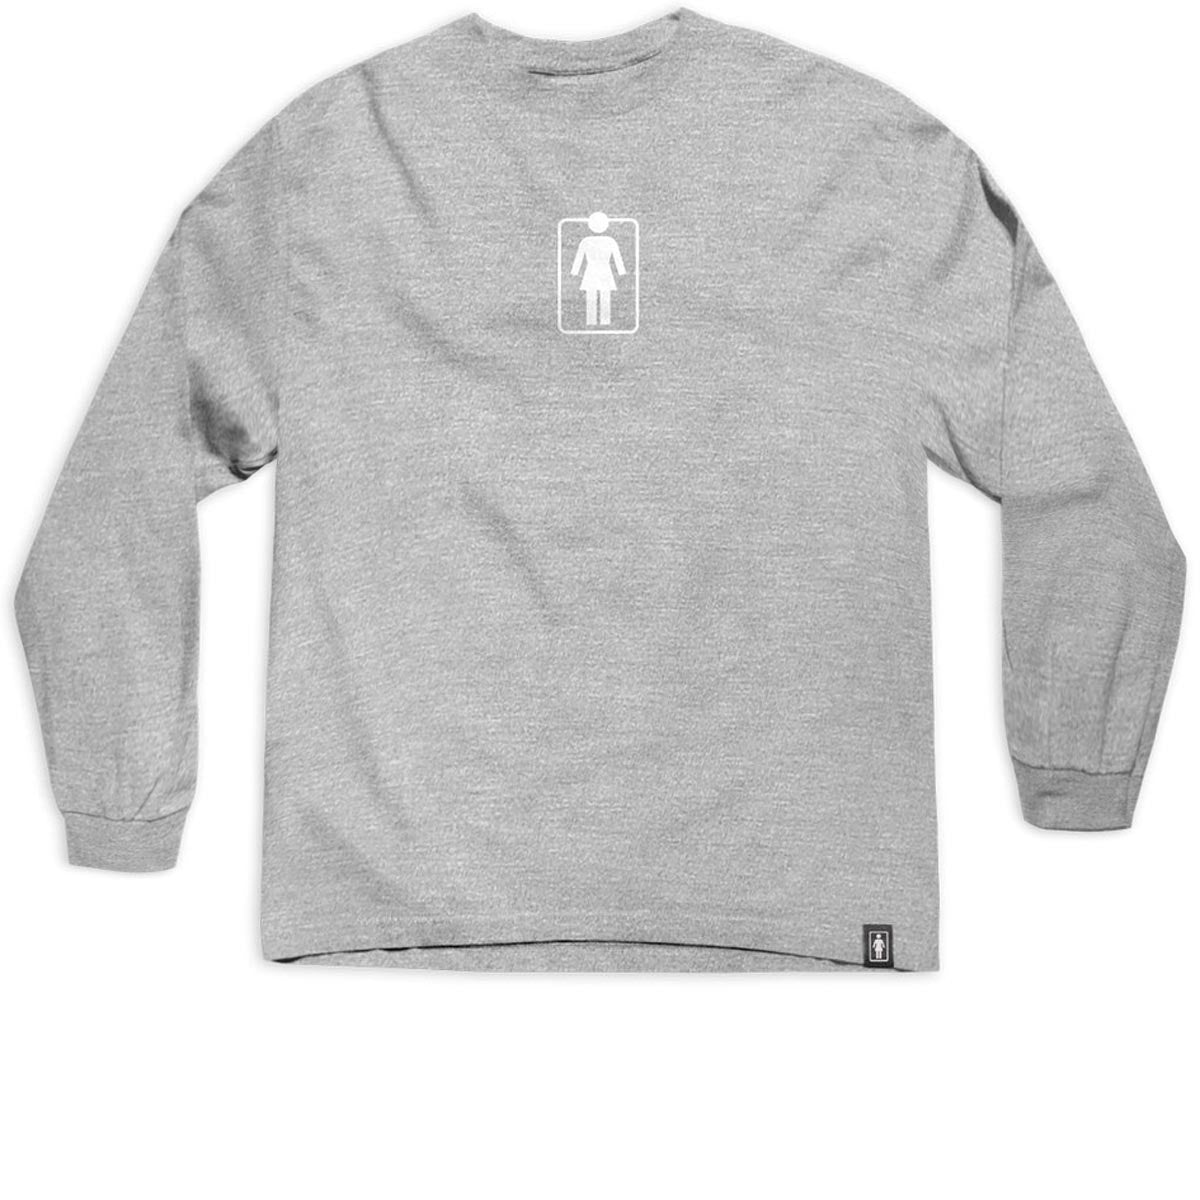 Girl Unboxed OG Long Sleeve T-Shirt - Sport Grey image 1